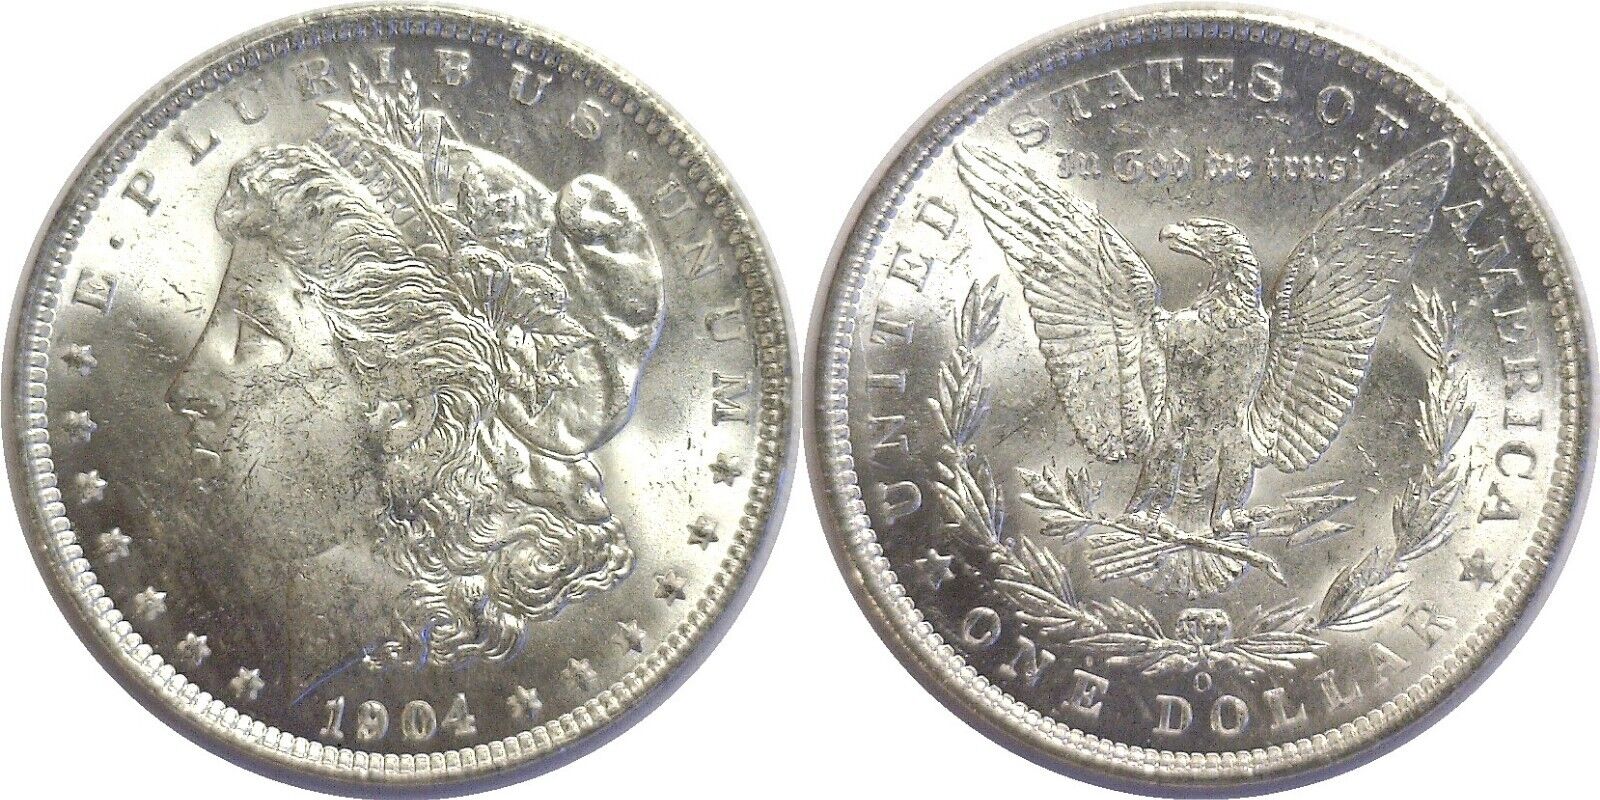 1904 Morgan Dollar BU Uncirculated Mint State 90% Silver $1 US Coin